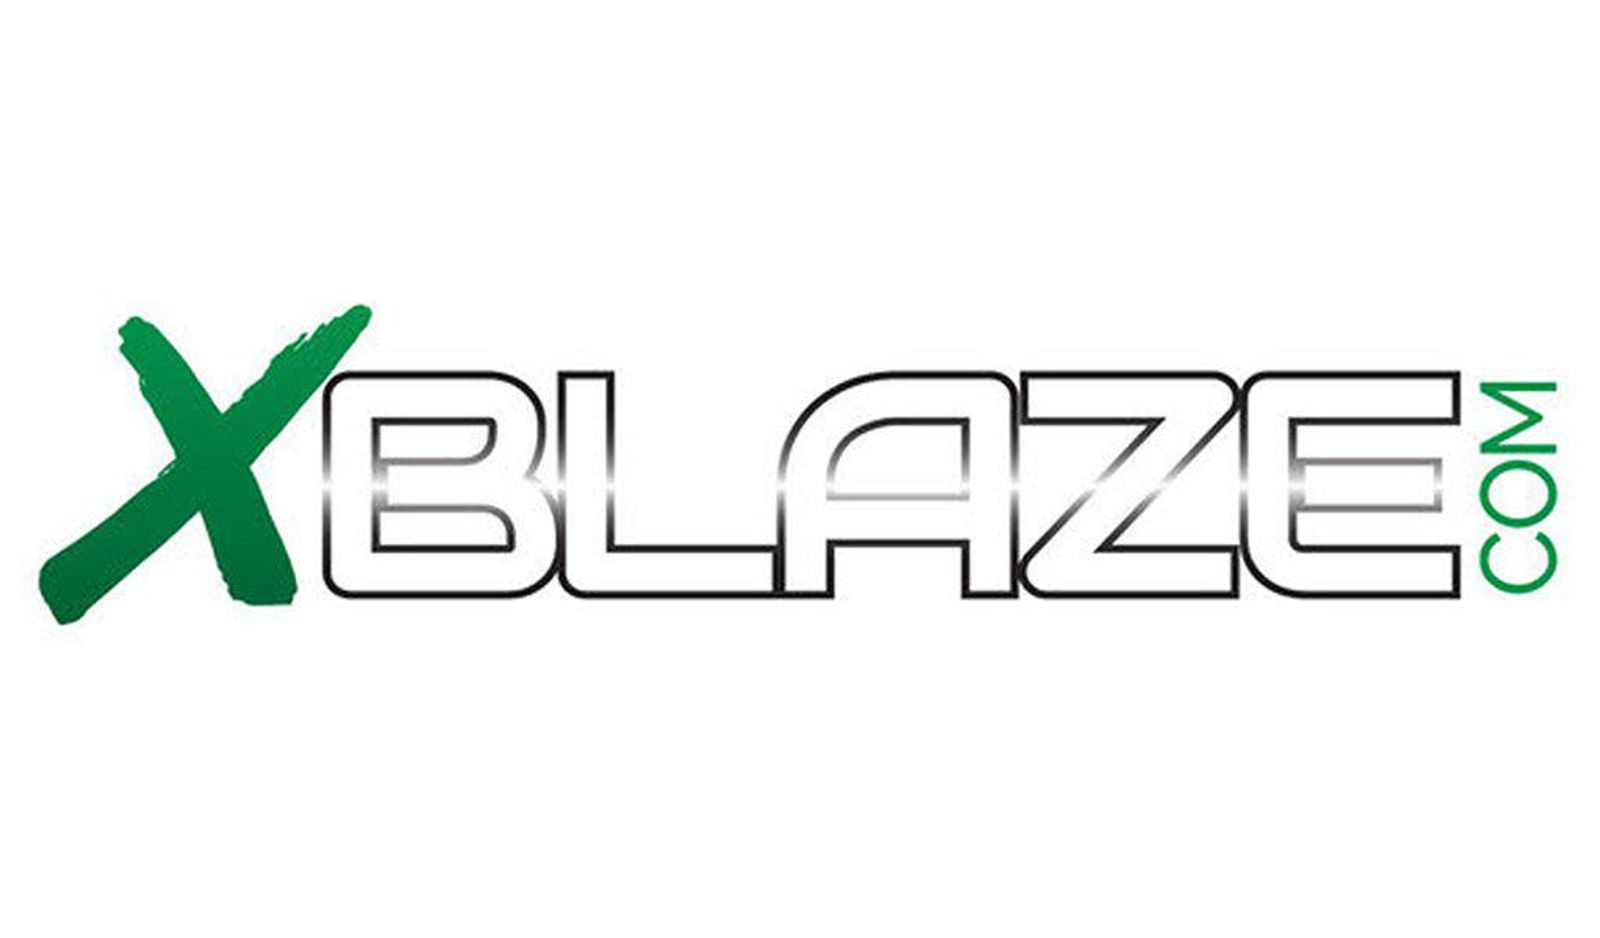 XBLAZE Acquires Anywhere.xxx, StrictlyBroadBand